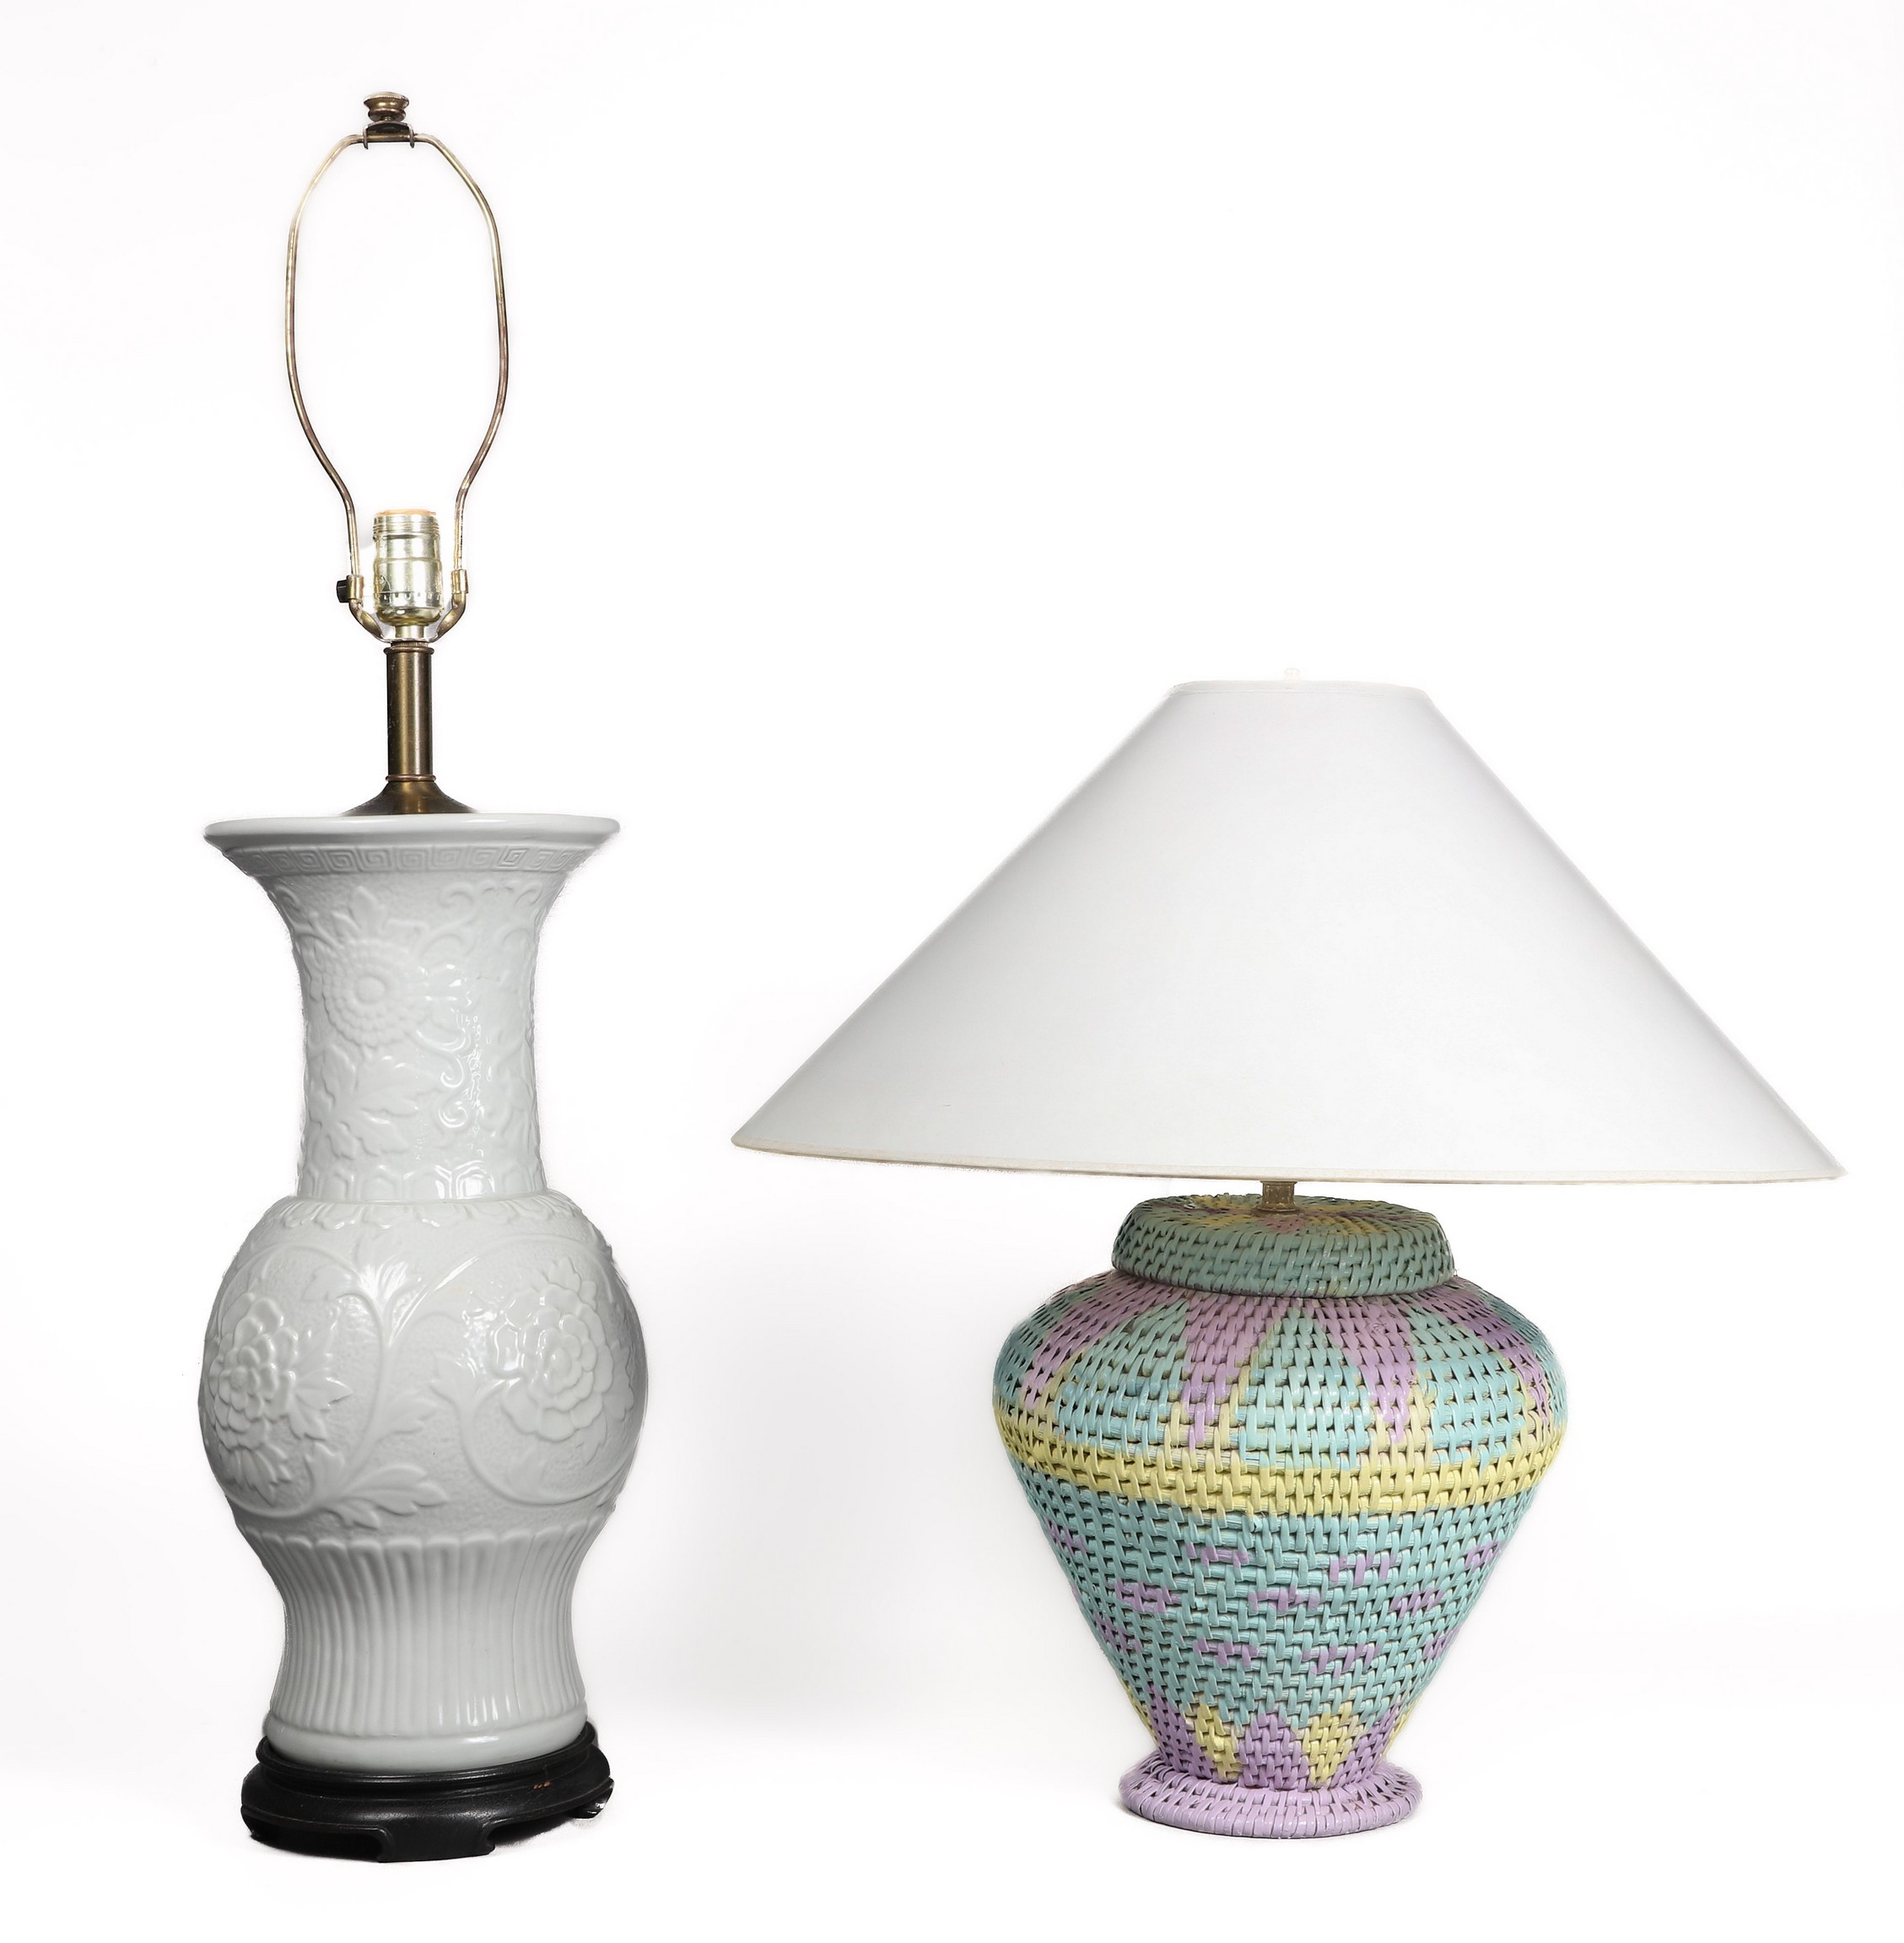 (2) Decorative table lamps, c/o